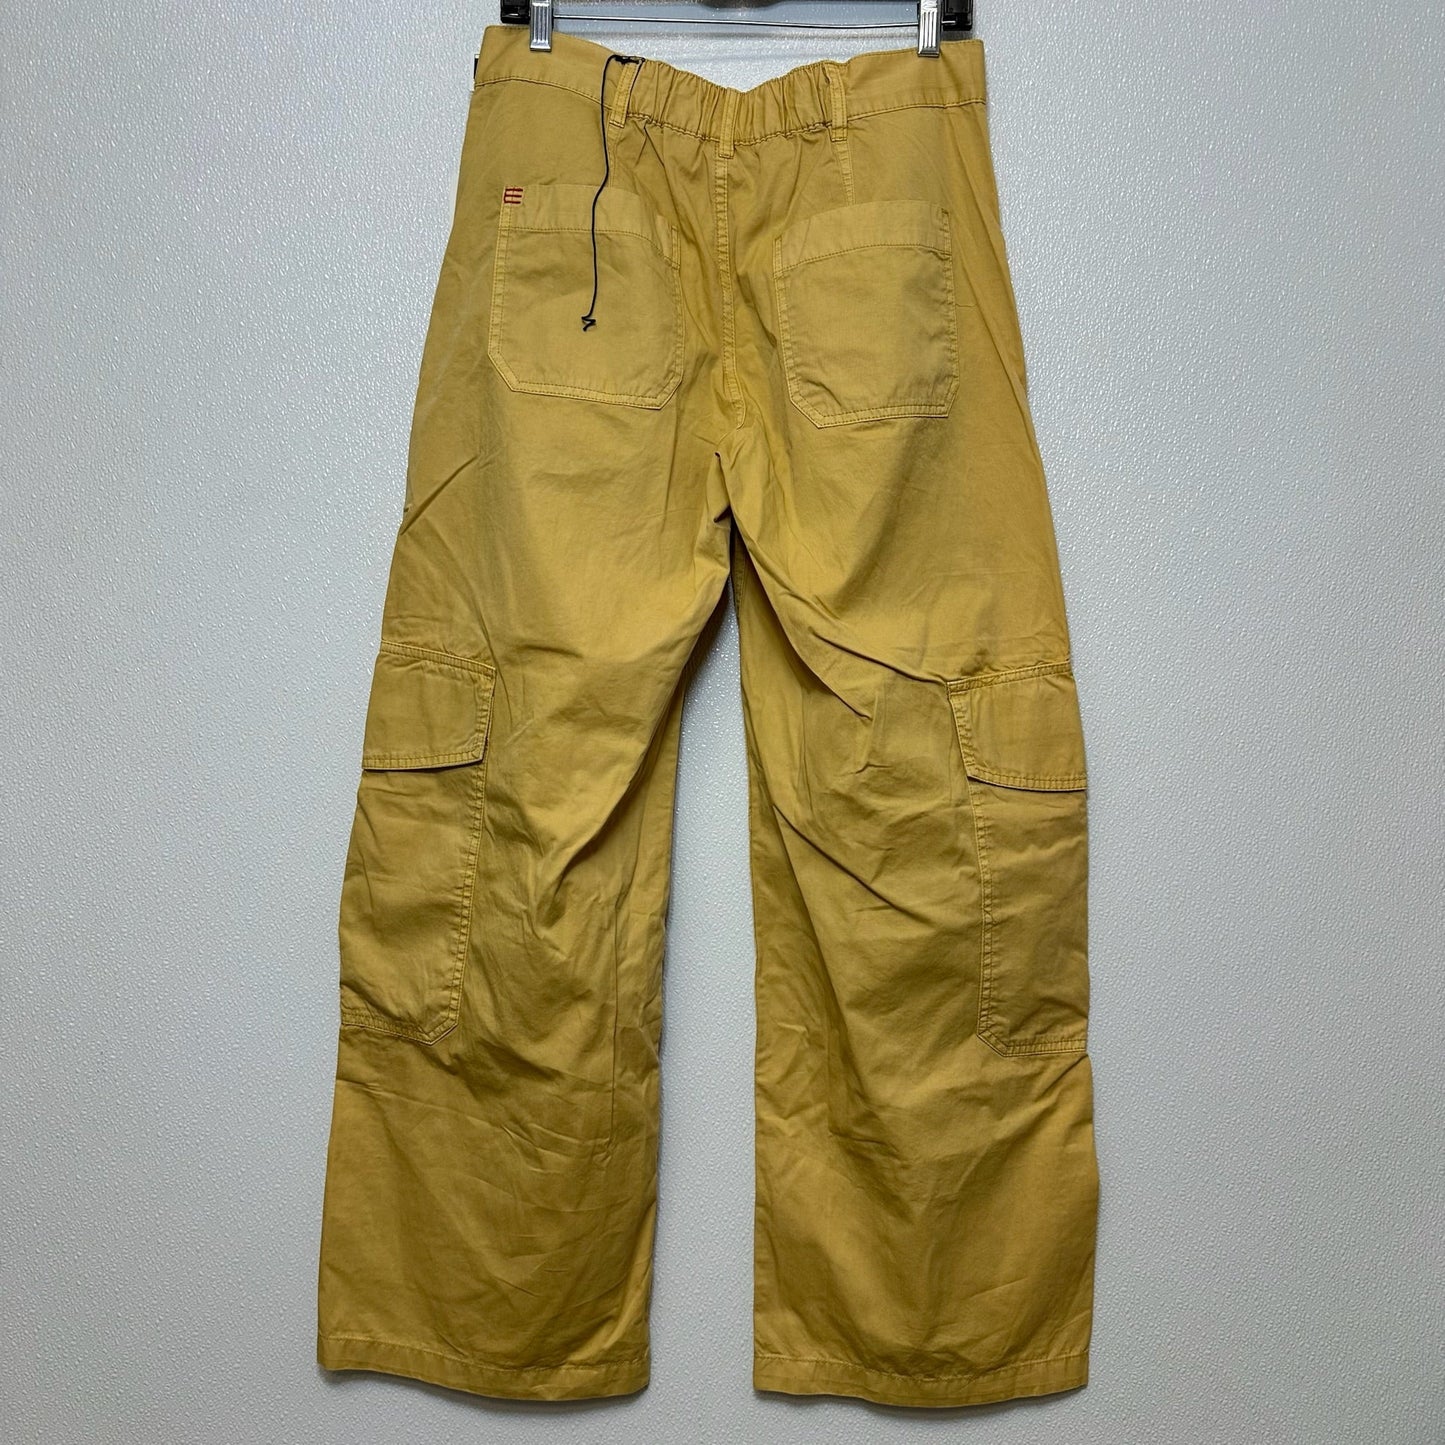 Pants Cargo & Utility Bdg, Size 4